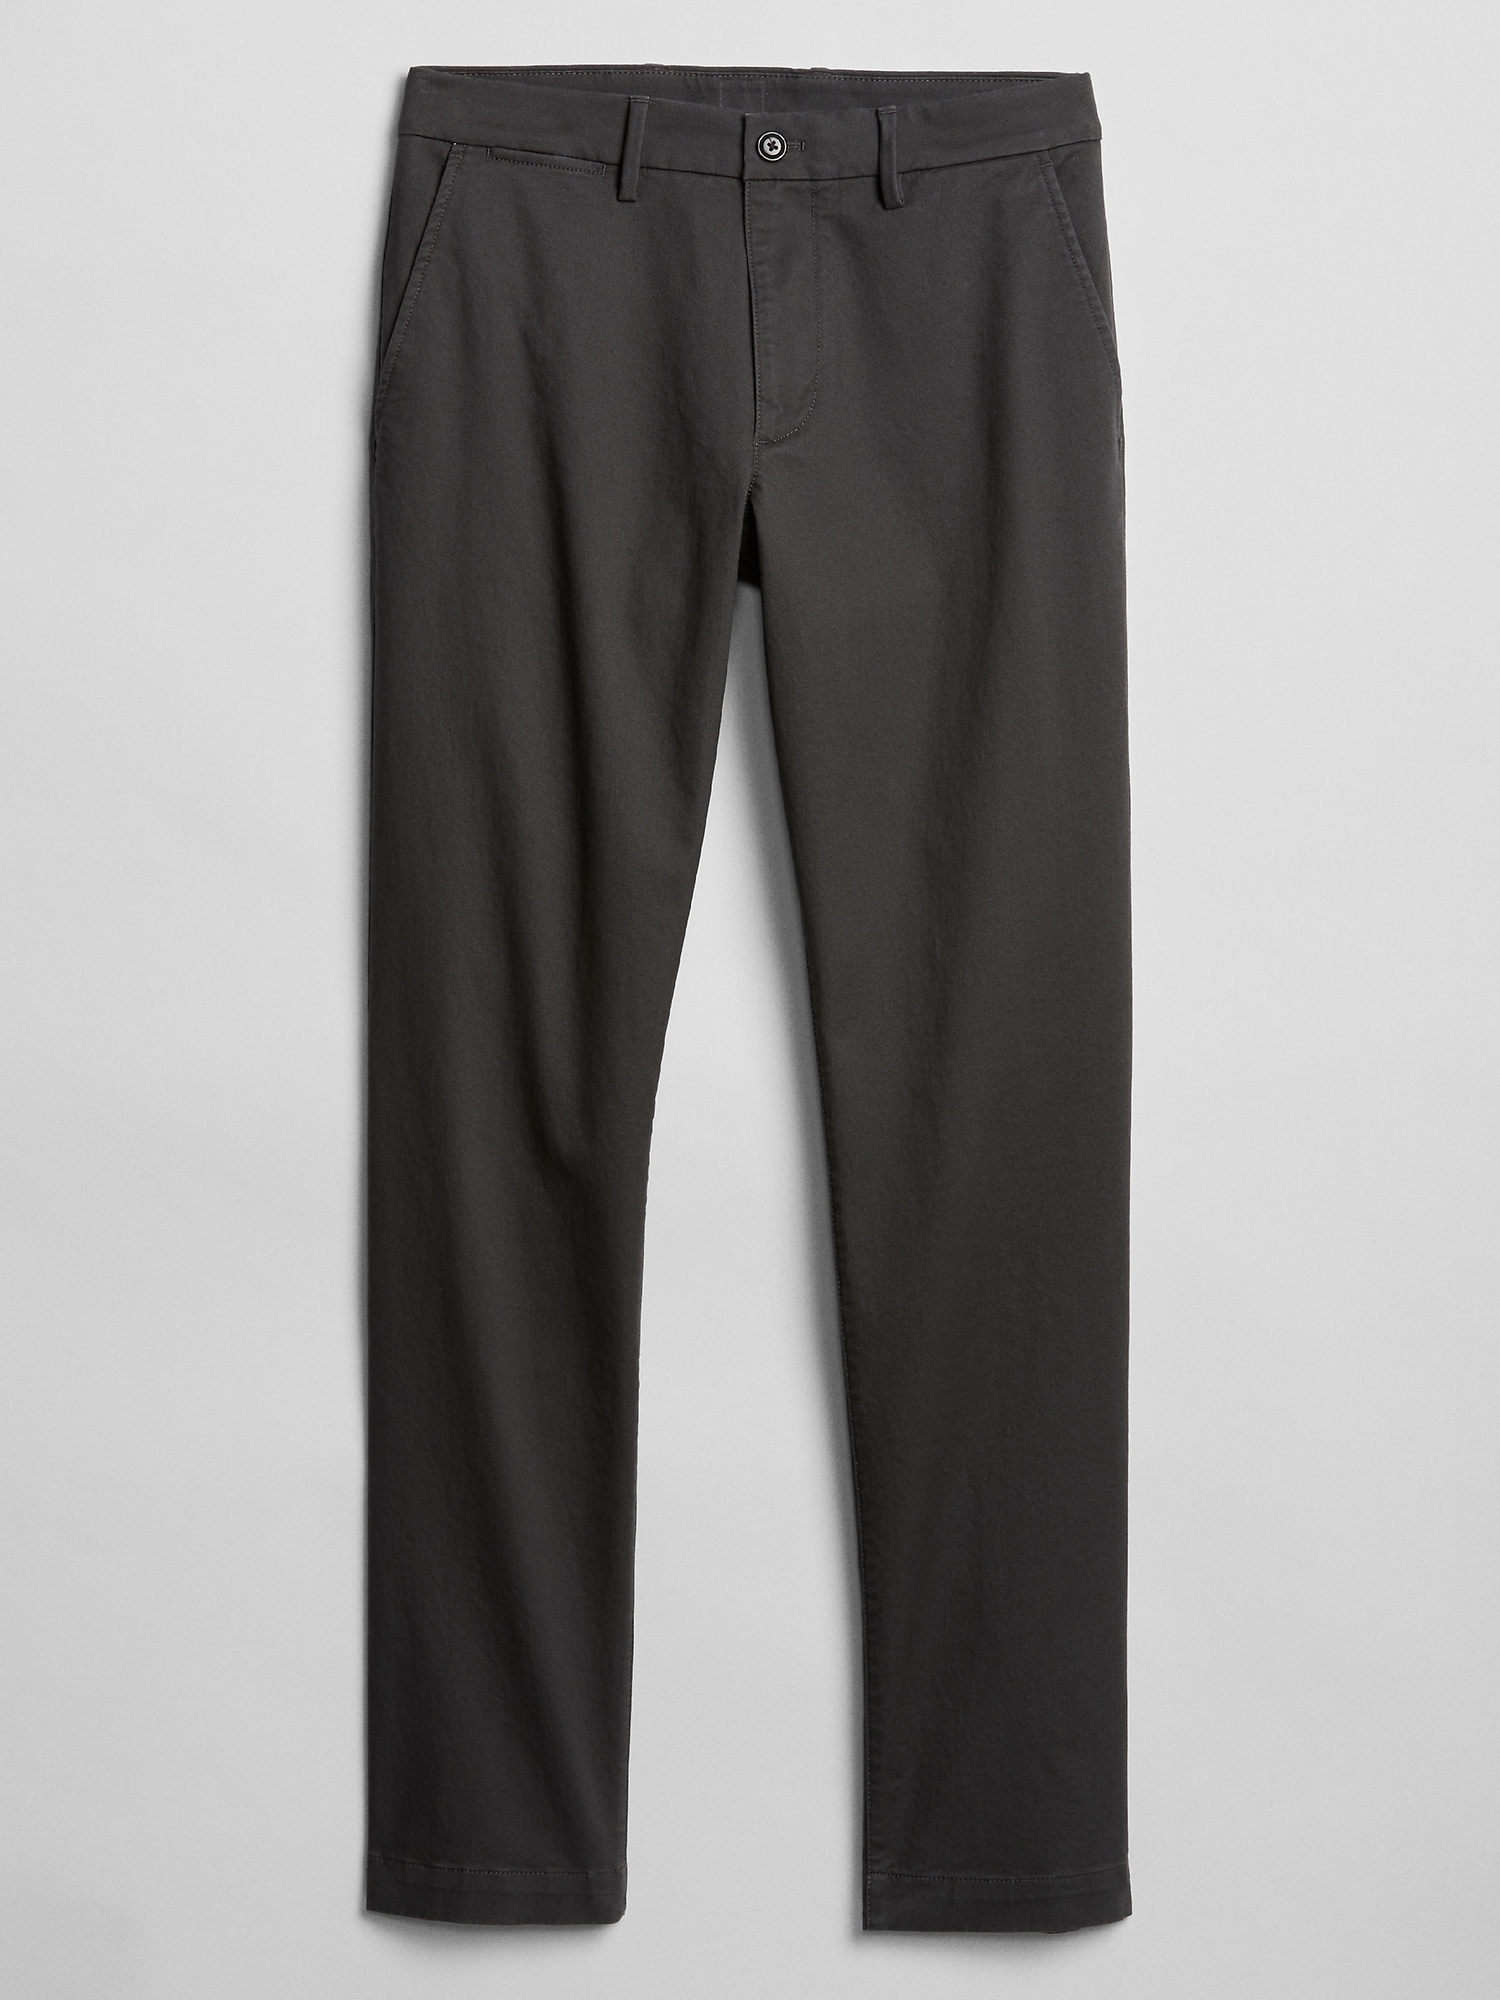 GAP Mens Essential Skinny Fit Khakis, Iconic Khaki, 34W x 30L US at   Men's Clothing store